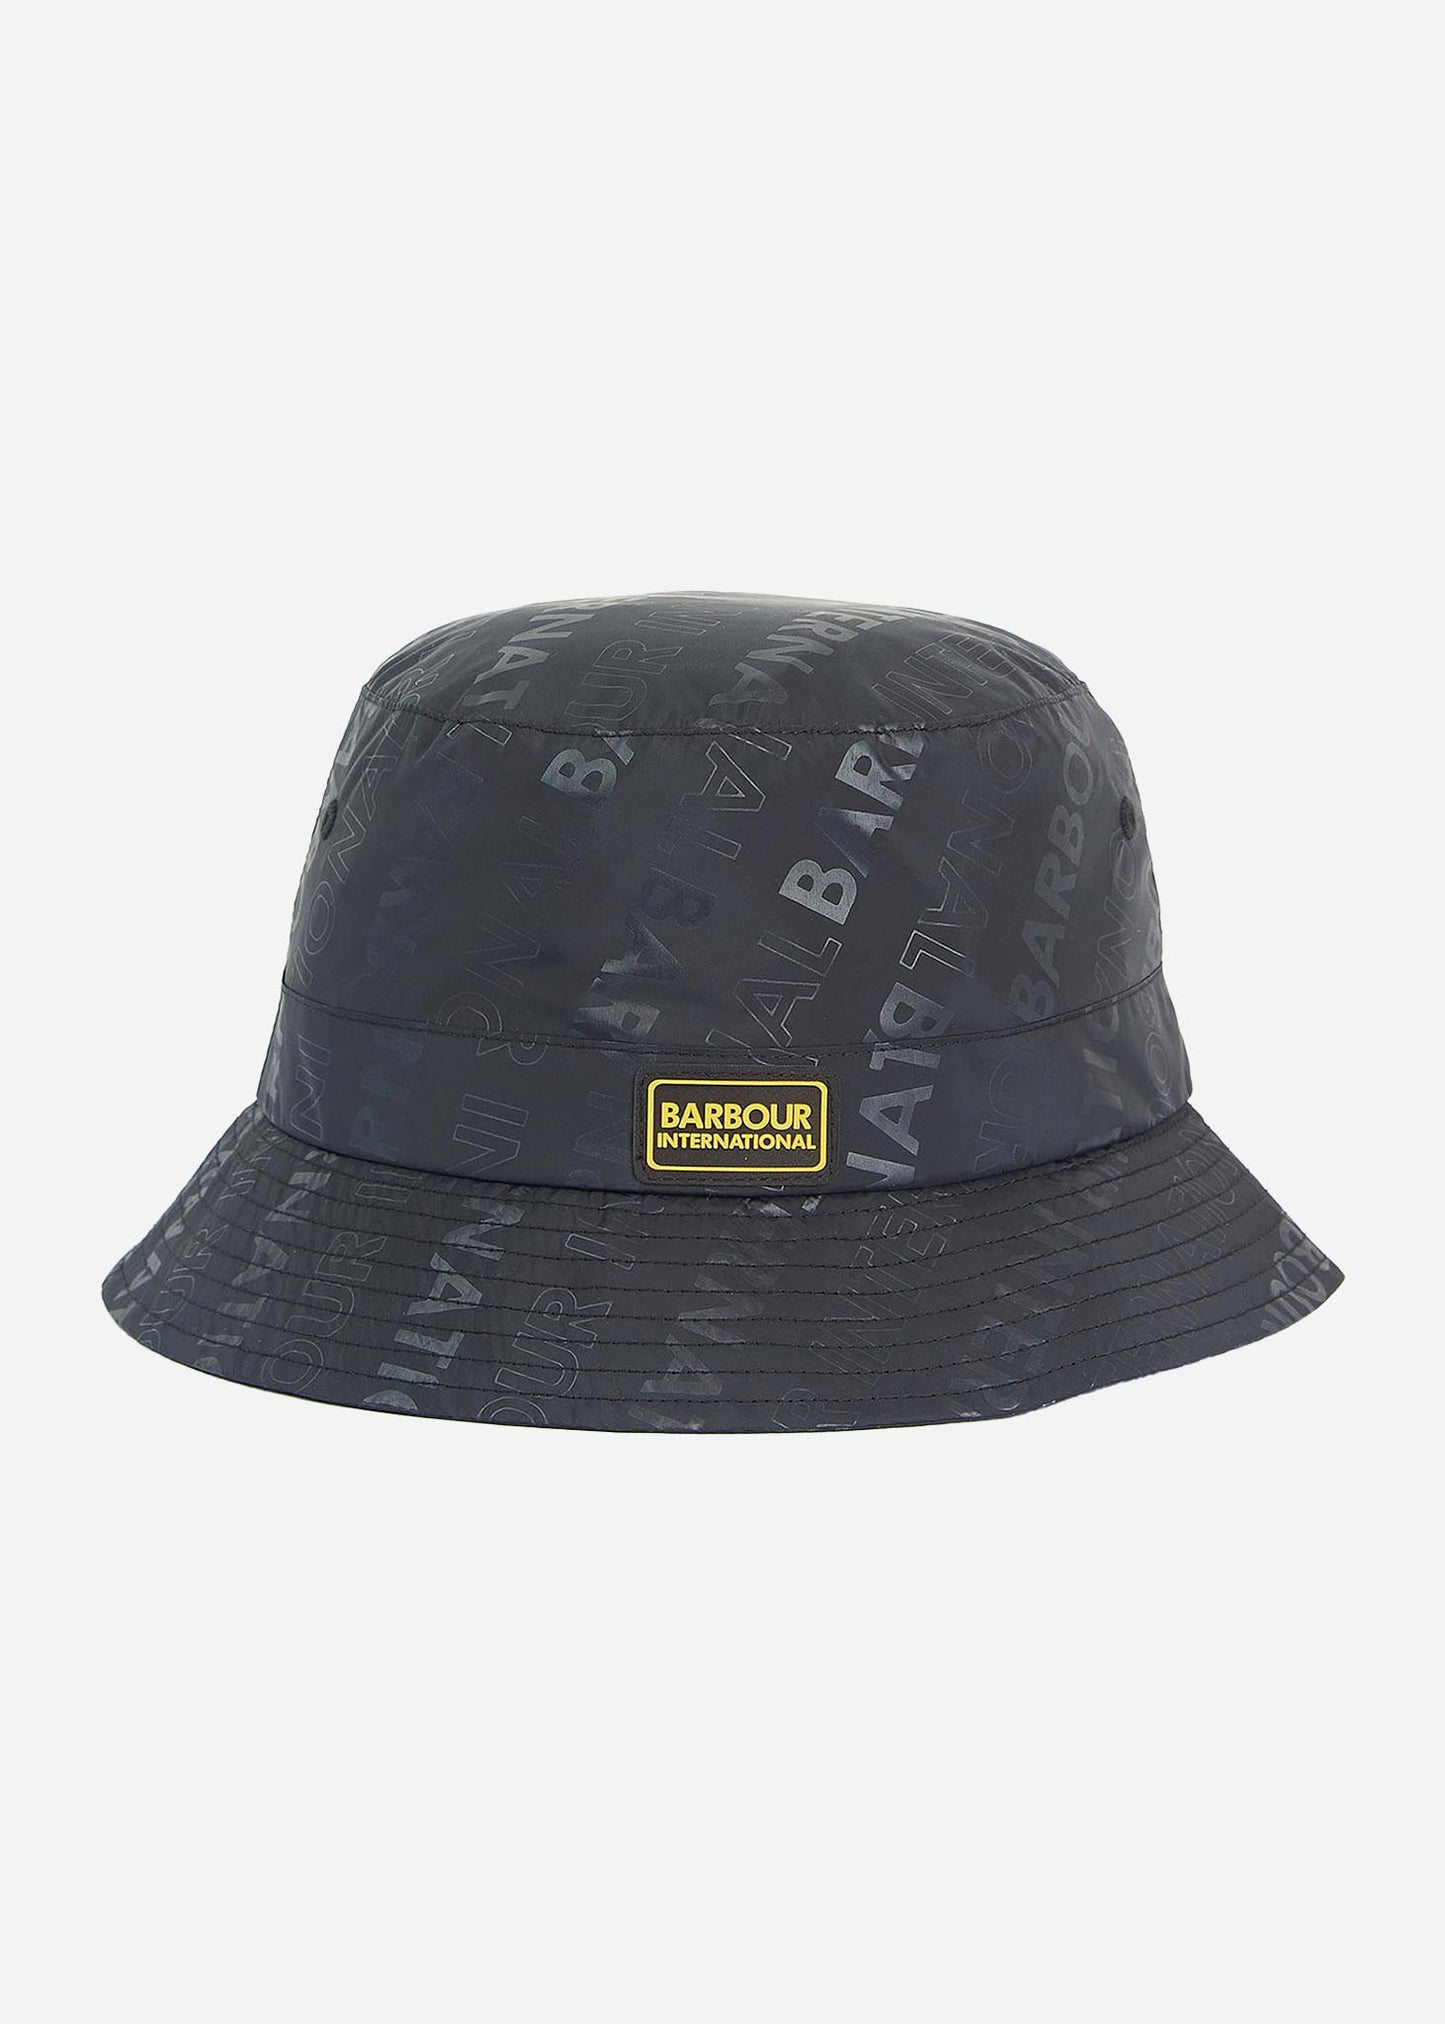 Reed sports hat - black emboss